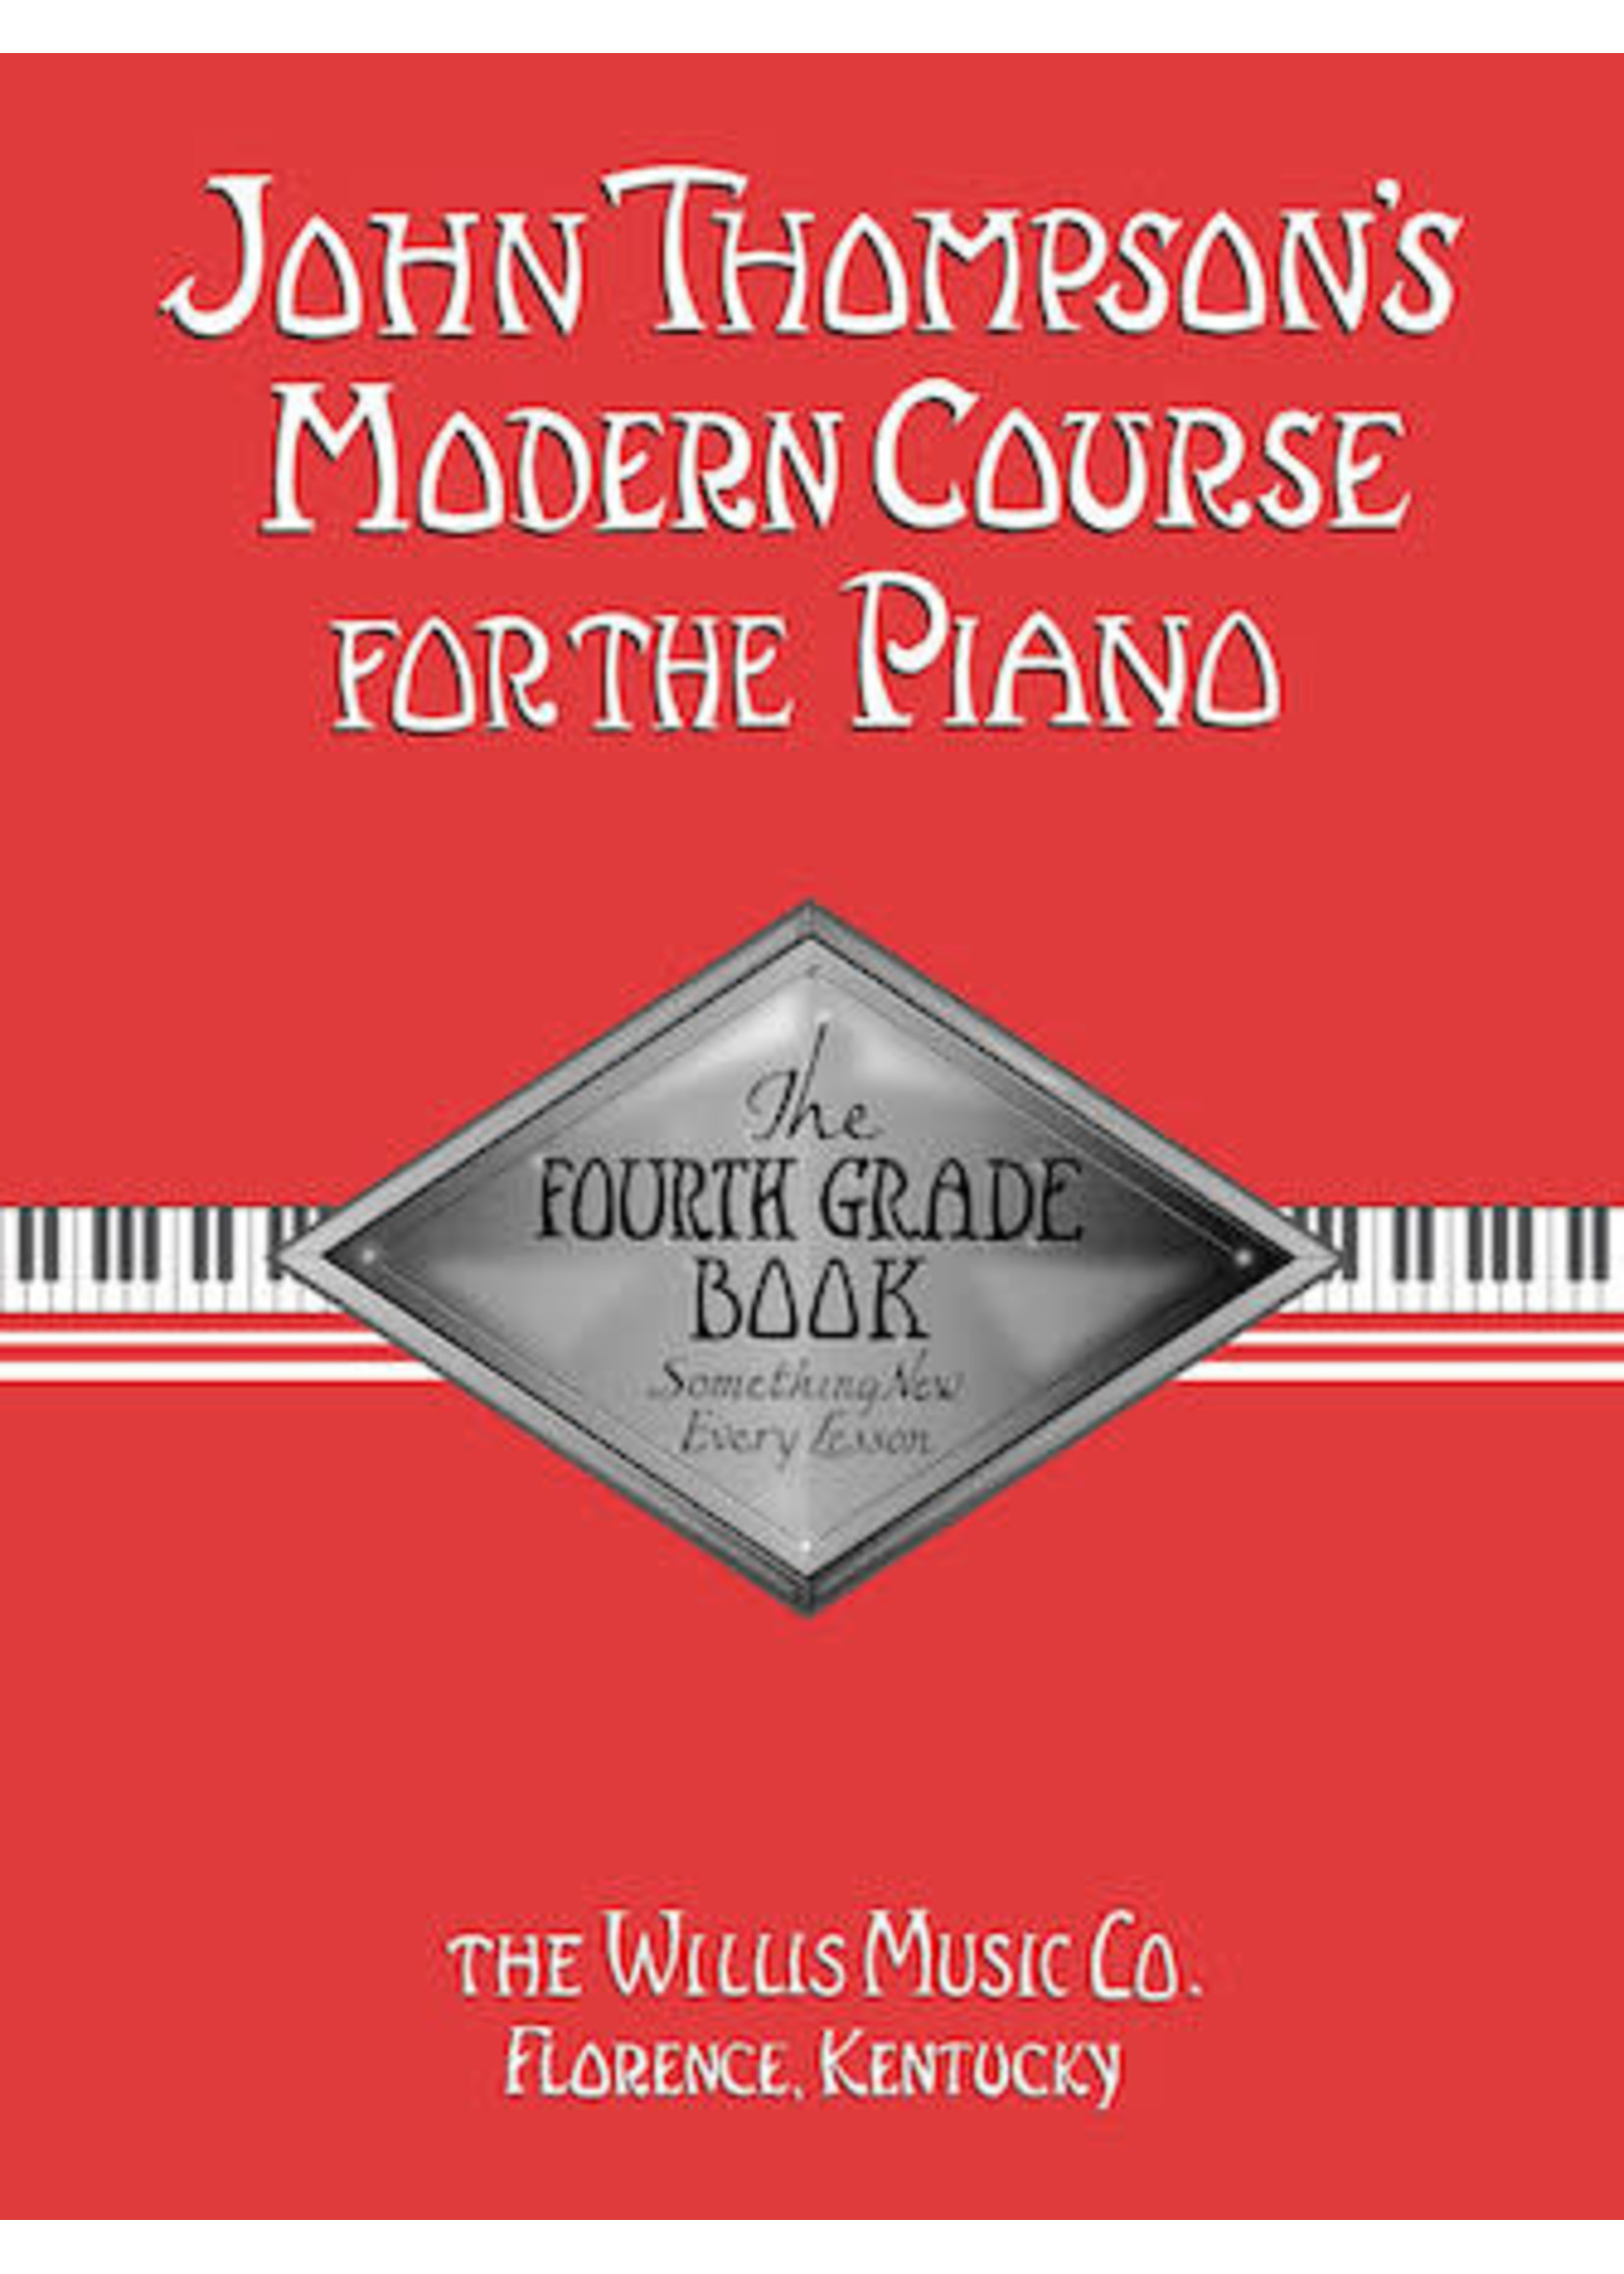 Hal Leonard John Thompson's Modern Course for the Piano Fourth Grade Book